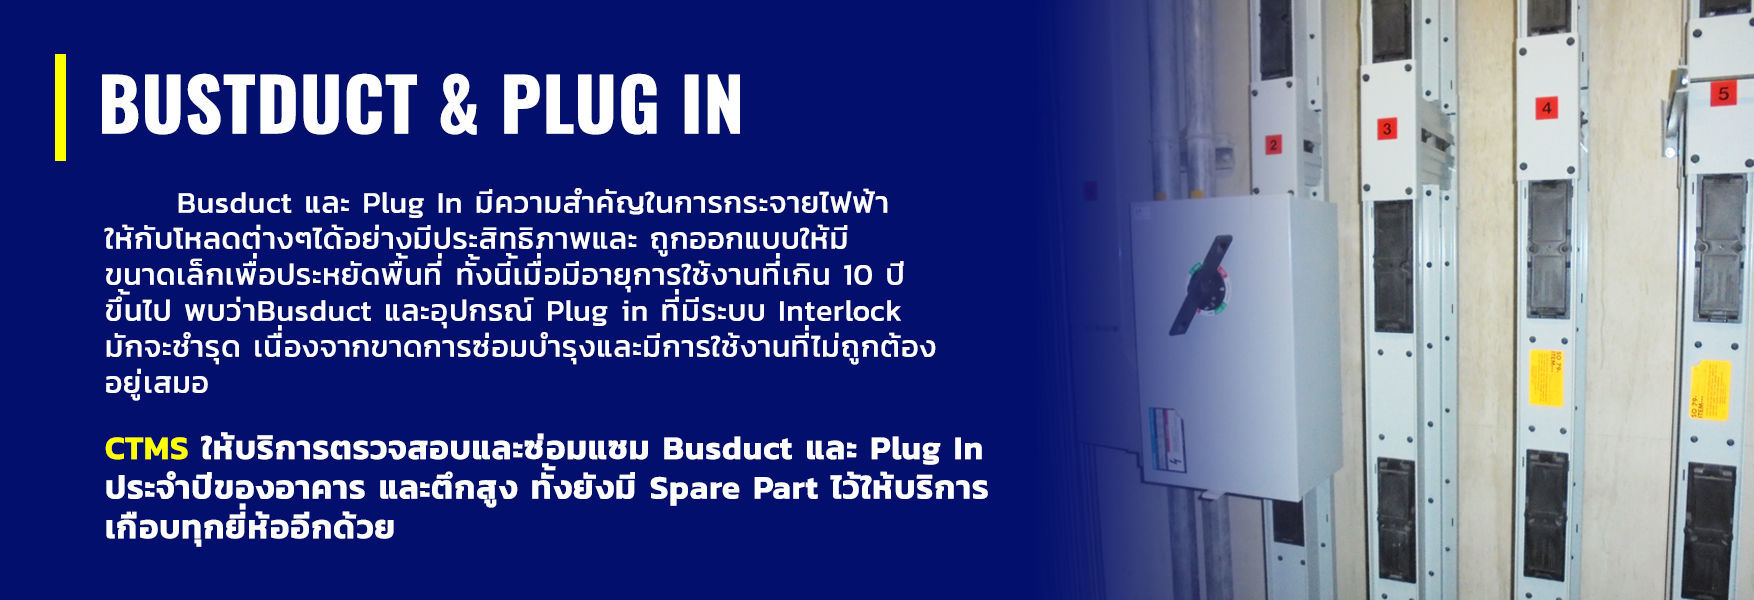 Bust Duct, Plugin , บำรุงรักษาBust Duct-Plugin , Preventive maintenance Bust Duct-Plugin, บำรุงรักษา